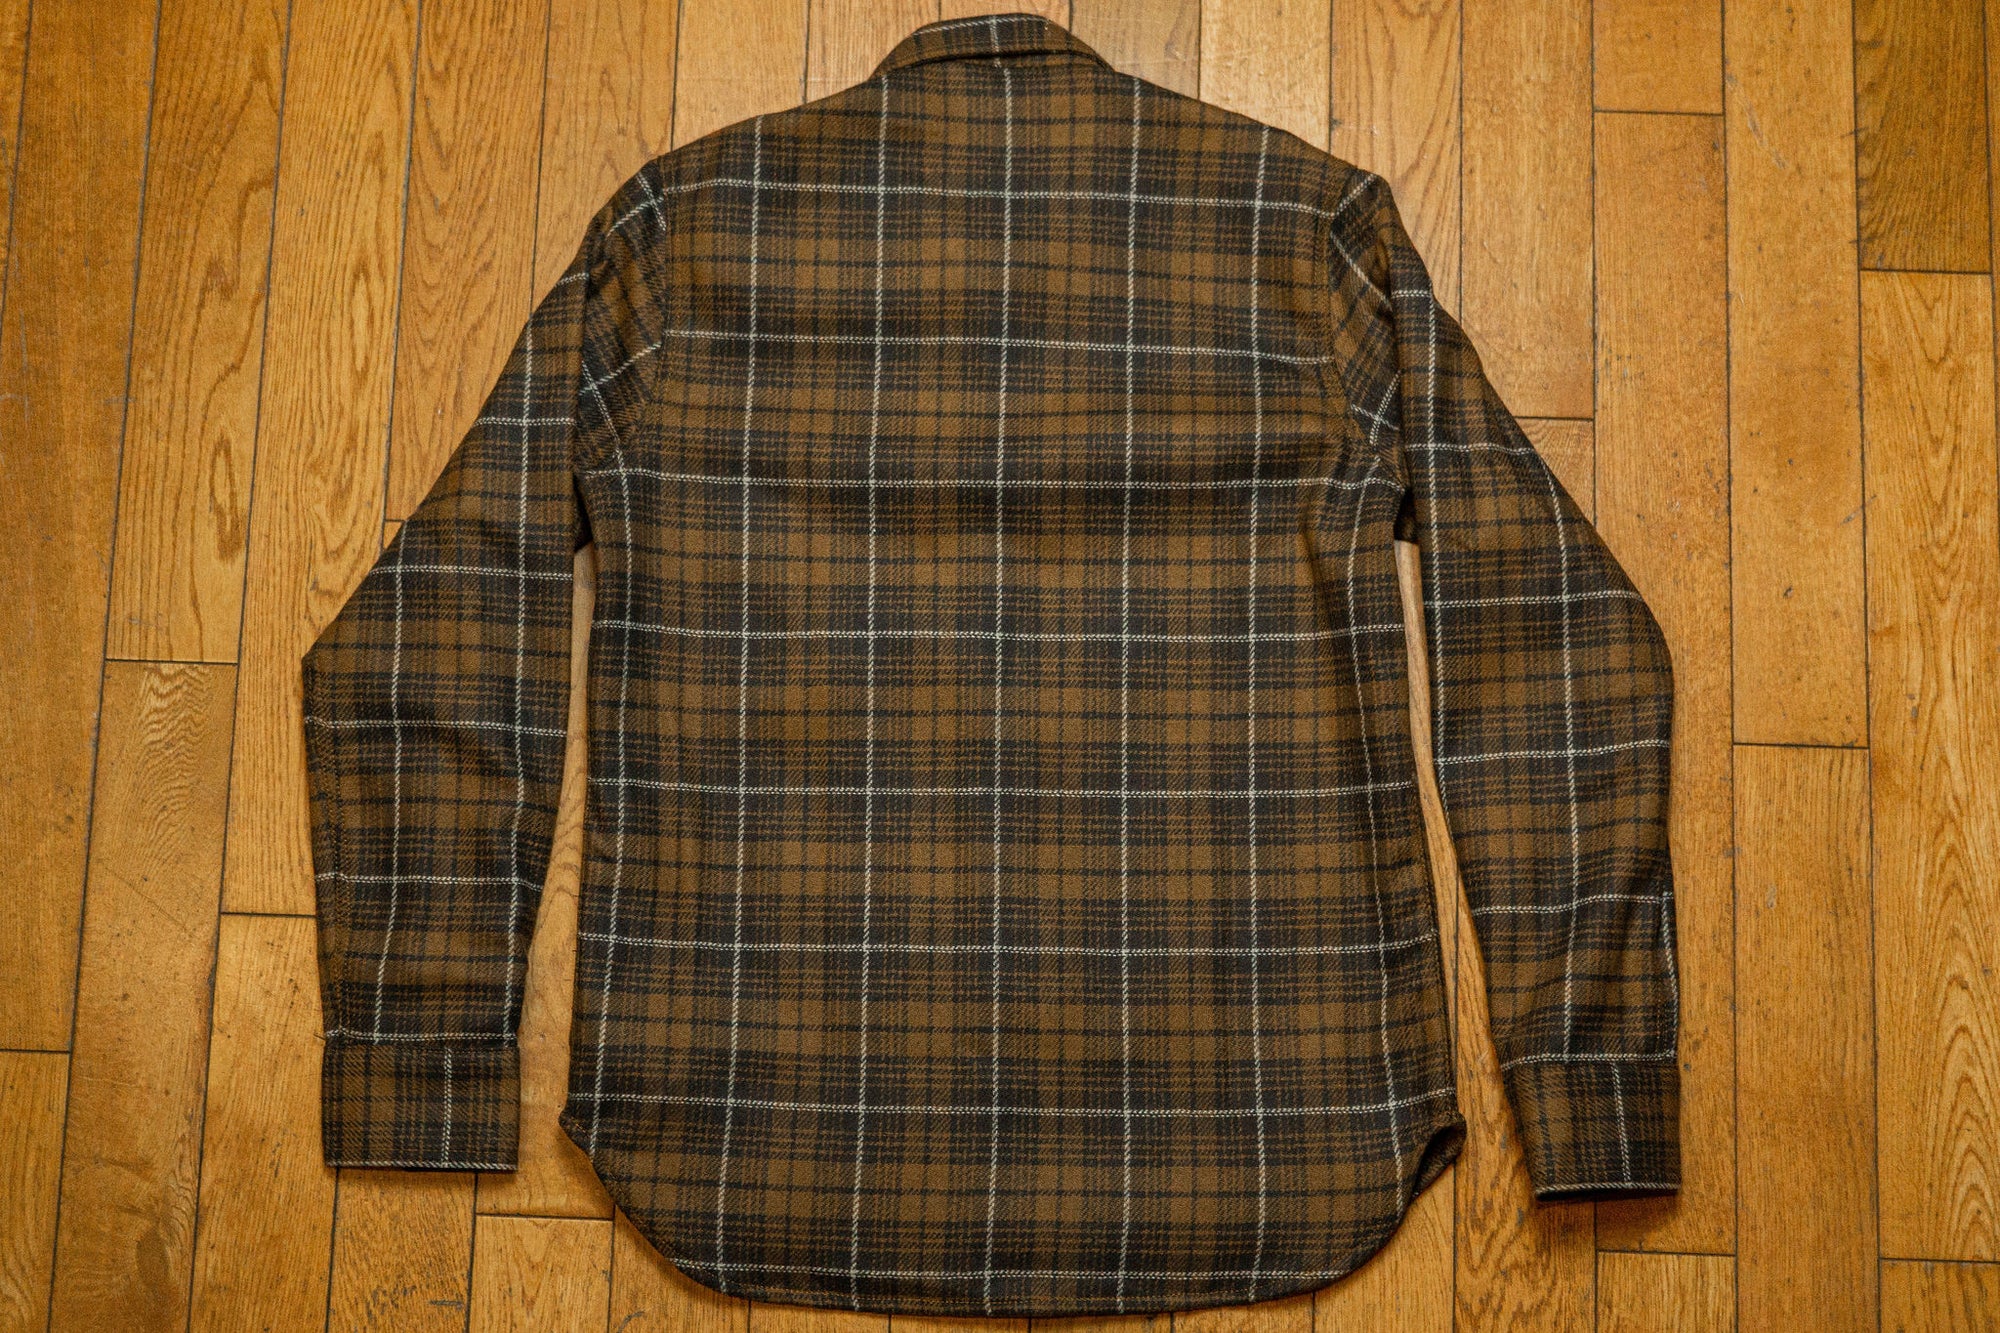 Ginew Shirt Jacket - Brown Plaid